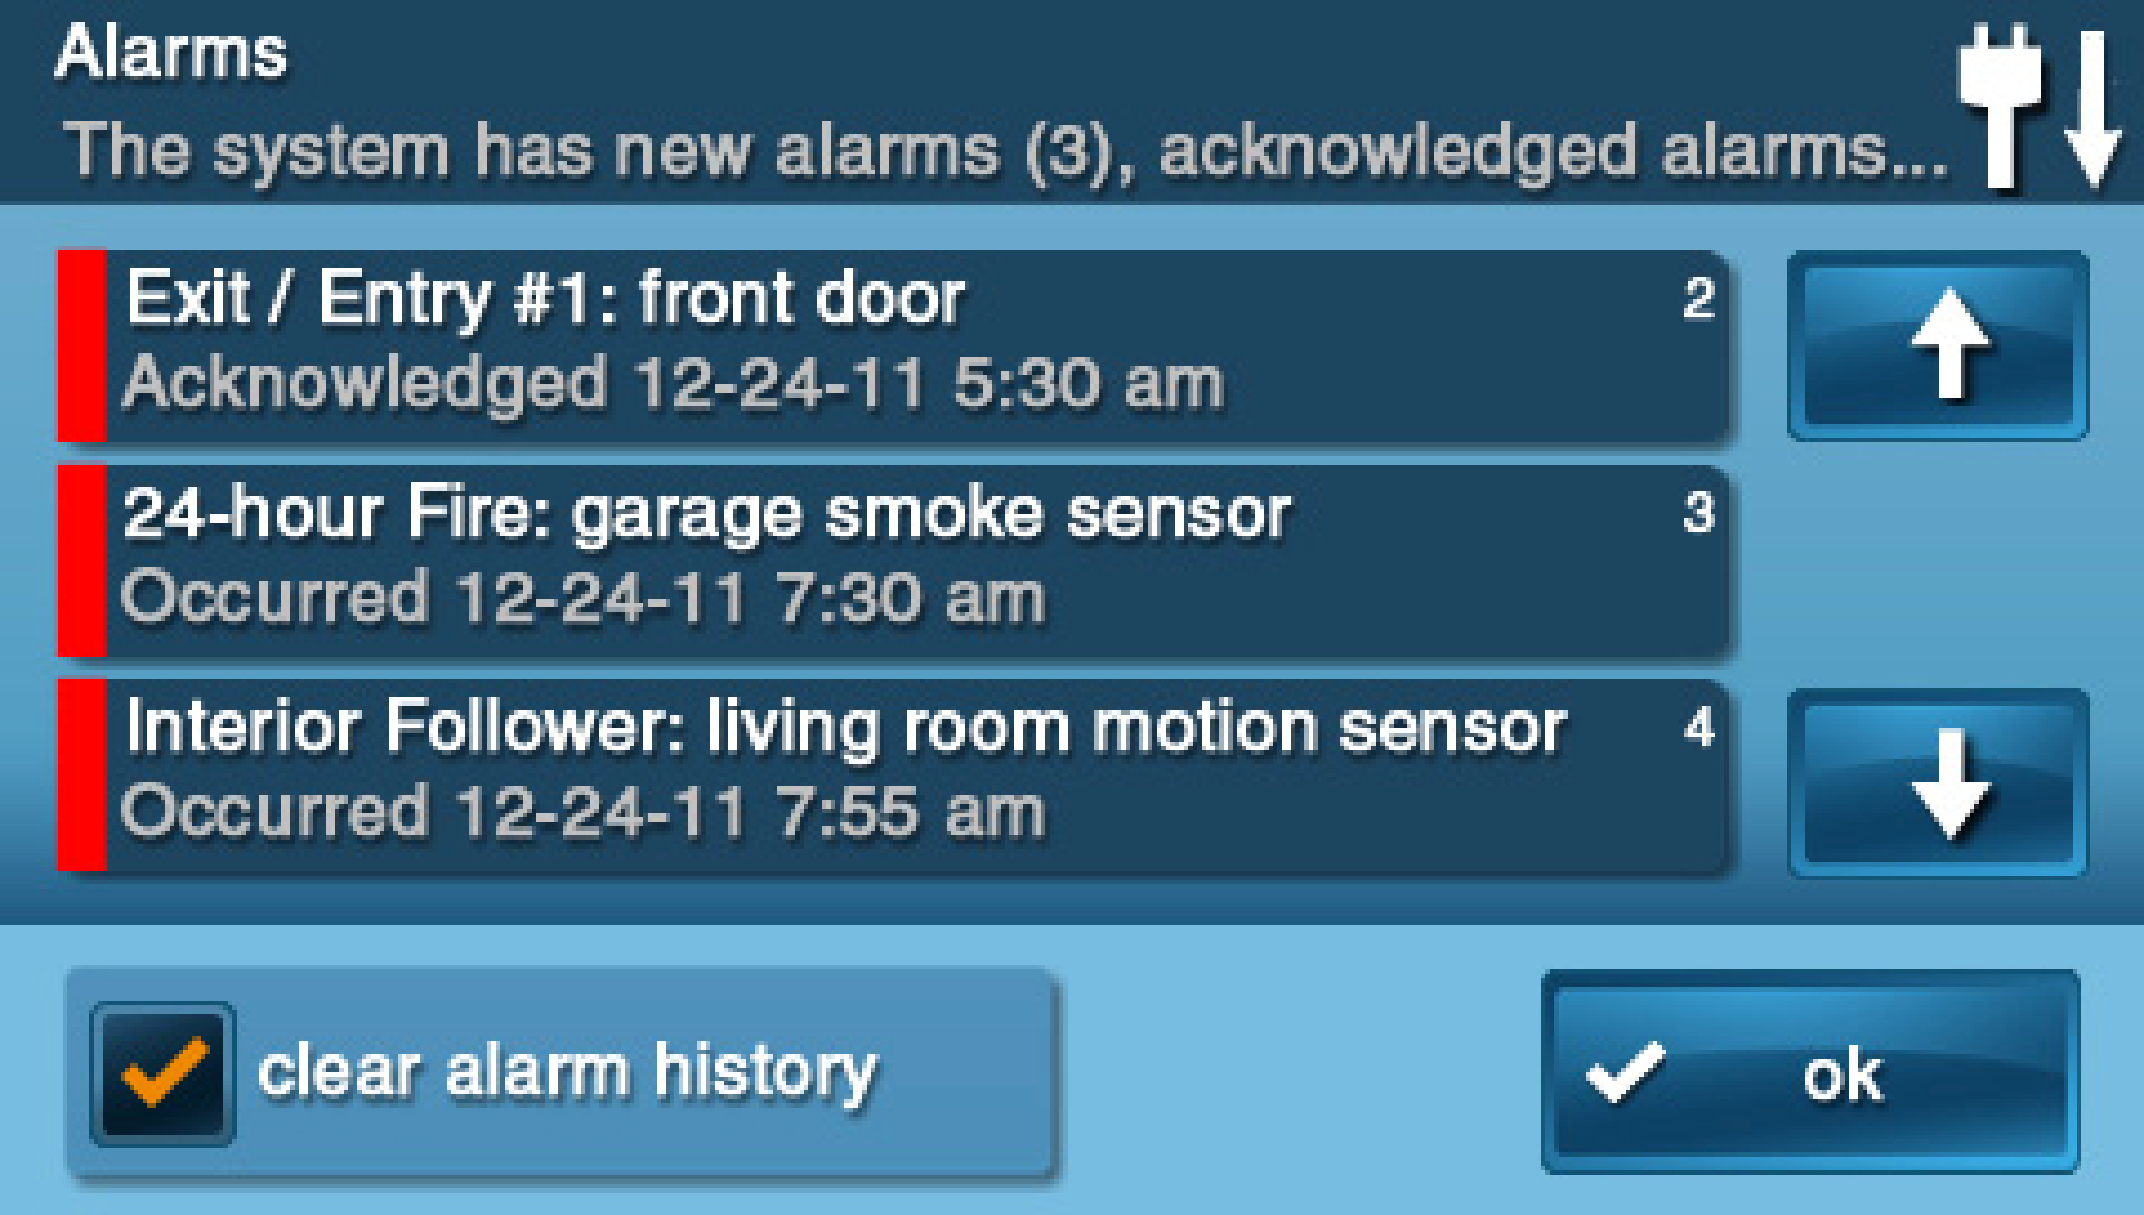 Alarm history log